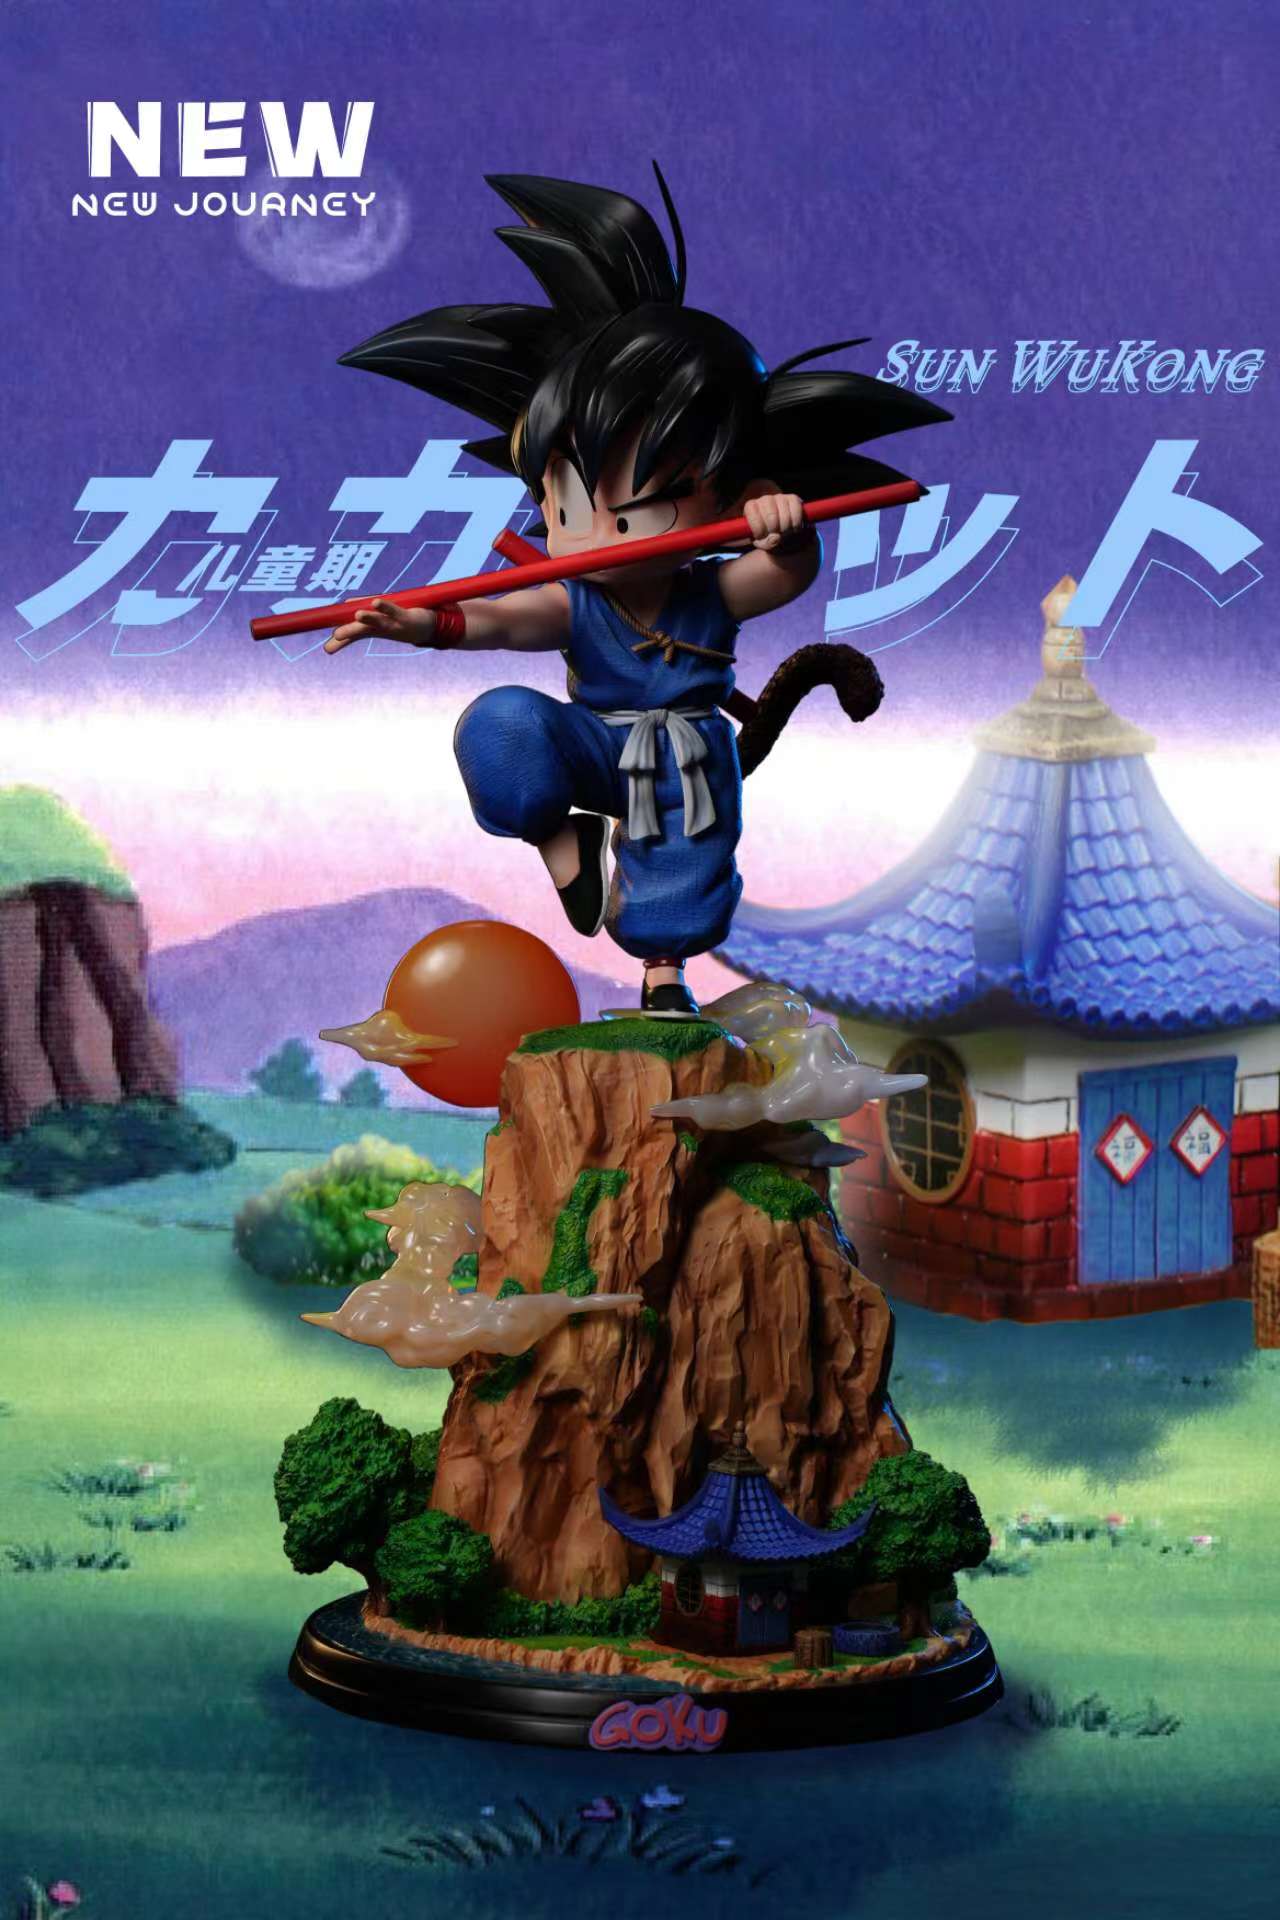 New Journey - Kid Goku